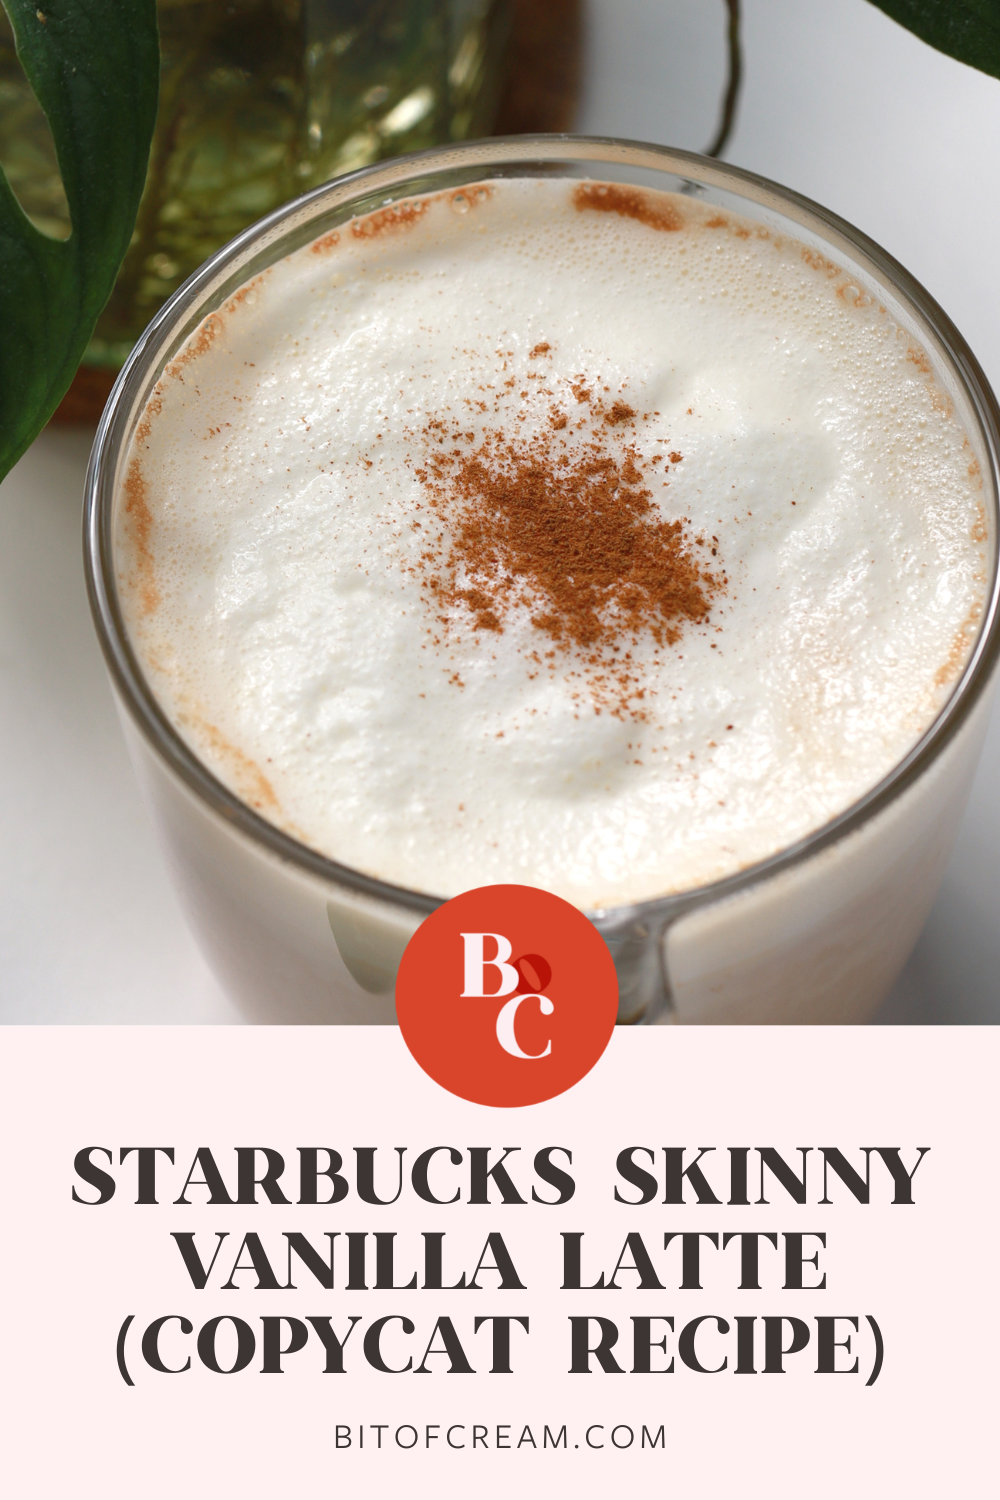 Starbucks Skinny Vanilla Latte